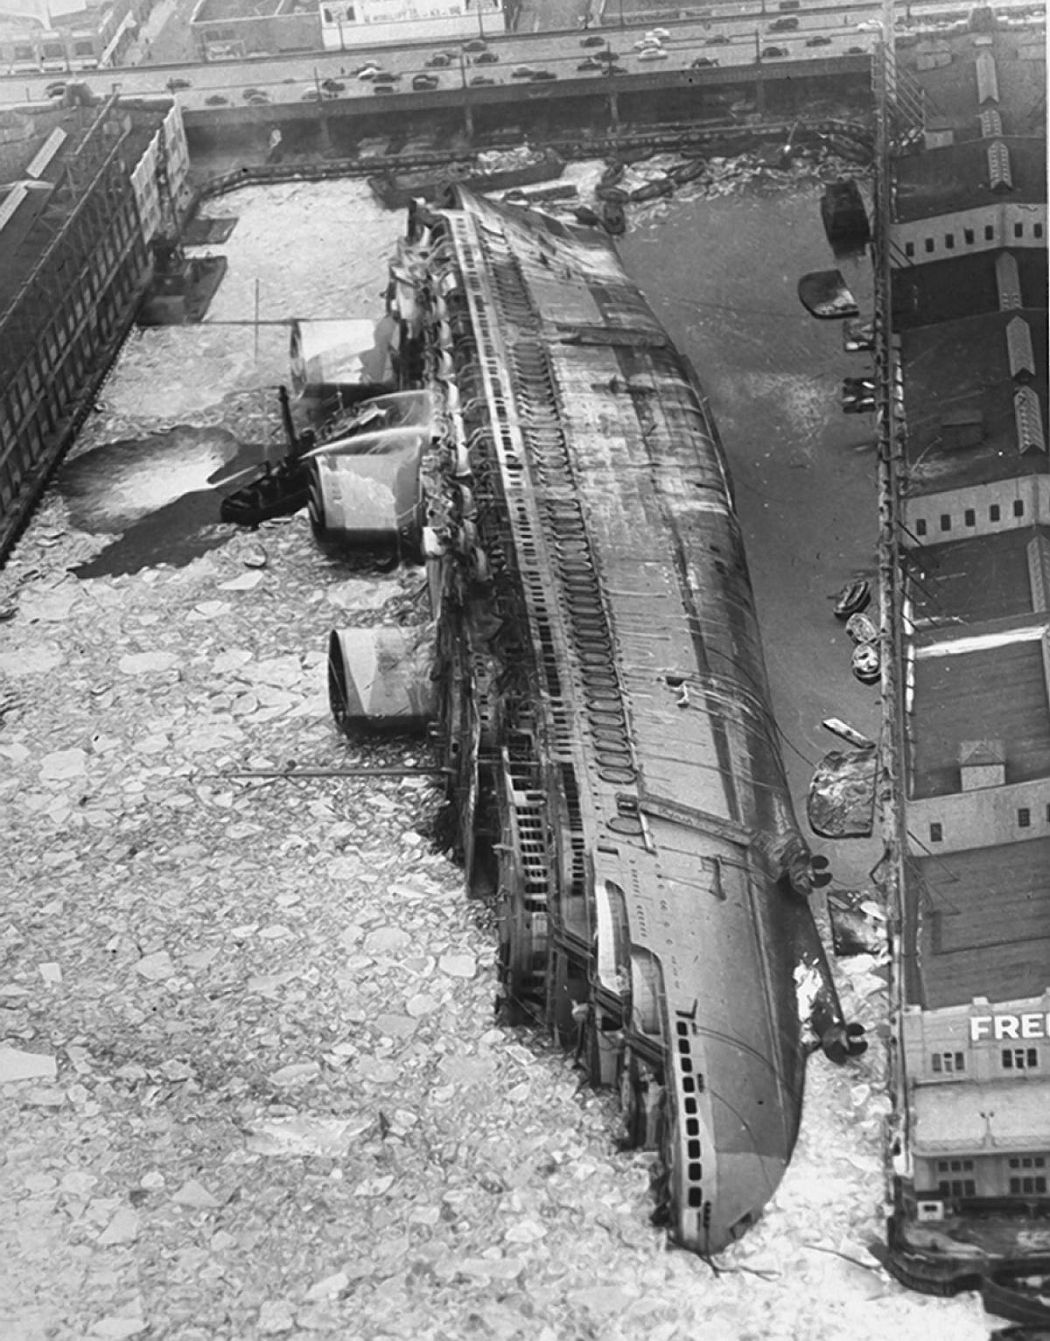 Normandie, renamed USS Lafayette, lies capsized in the frozen mud of her New York pier in the winter of 1942